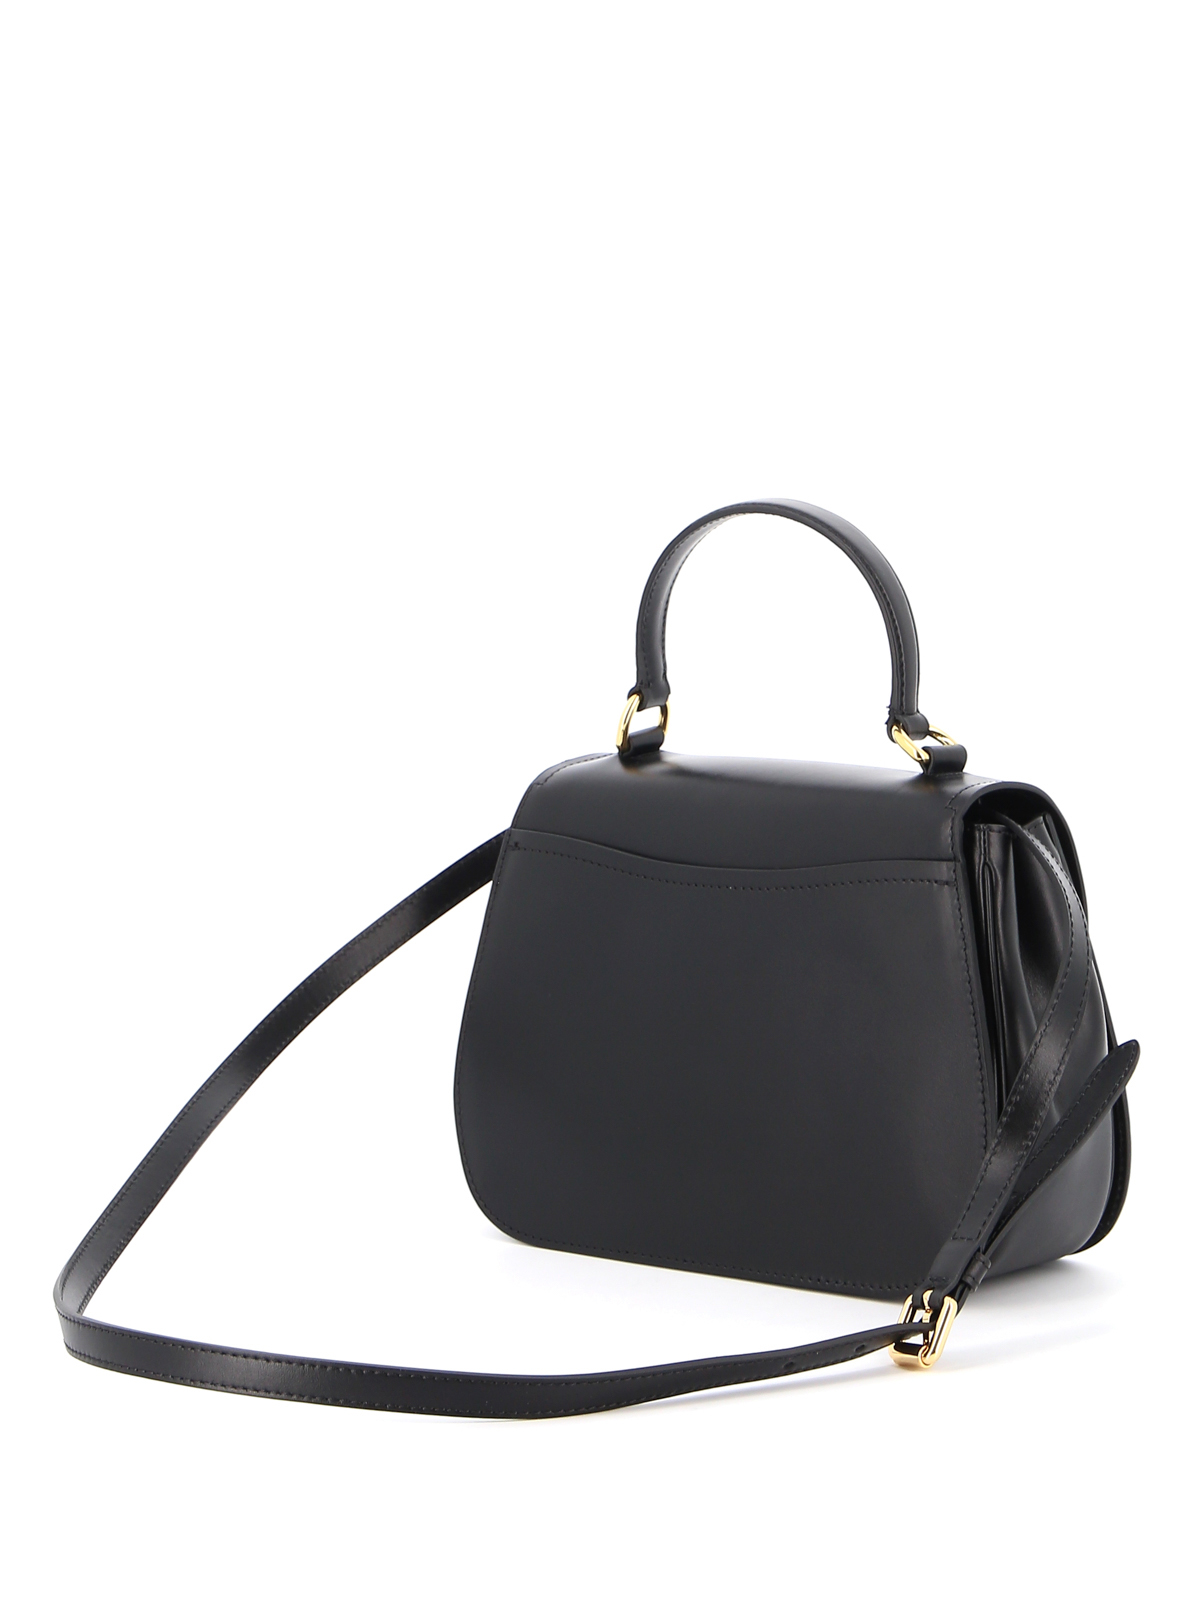 Moschino - M black leather shoulder bag 